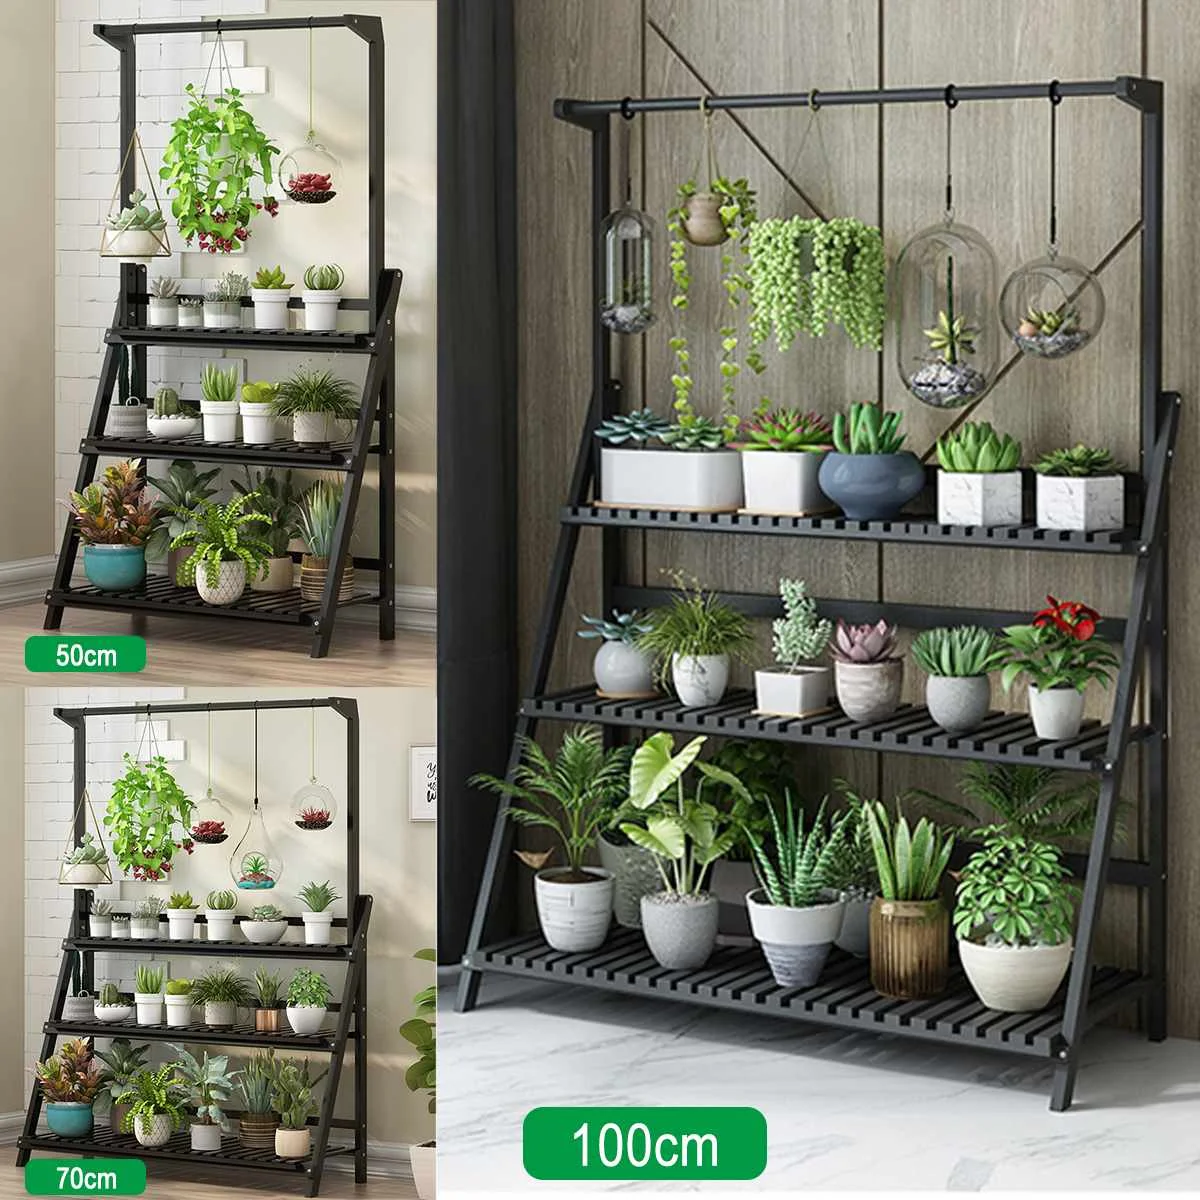 3 Tier Plant Stand Rack With Hanging Basket Adjustable Flower Planter Rack Shelf Shelves Organizer Bonsai Display Shelf Plant